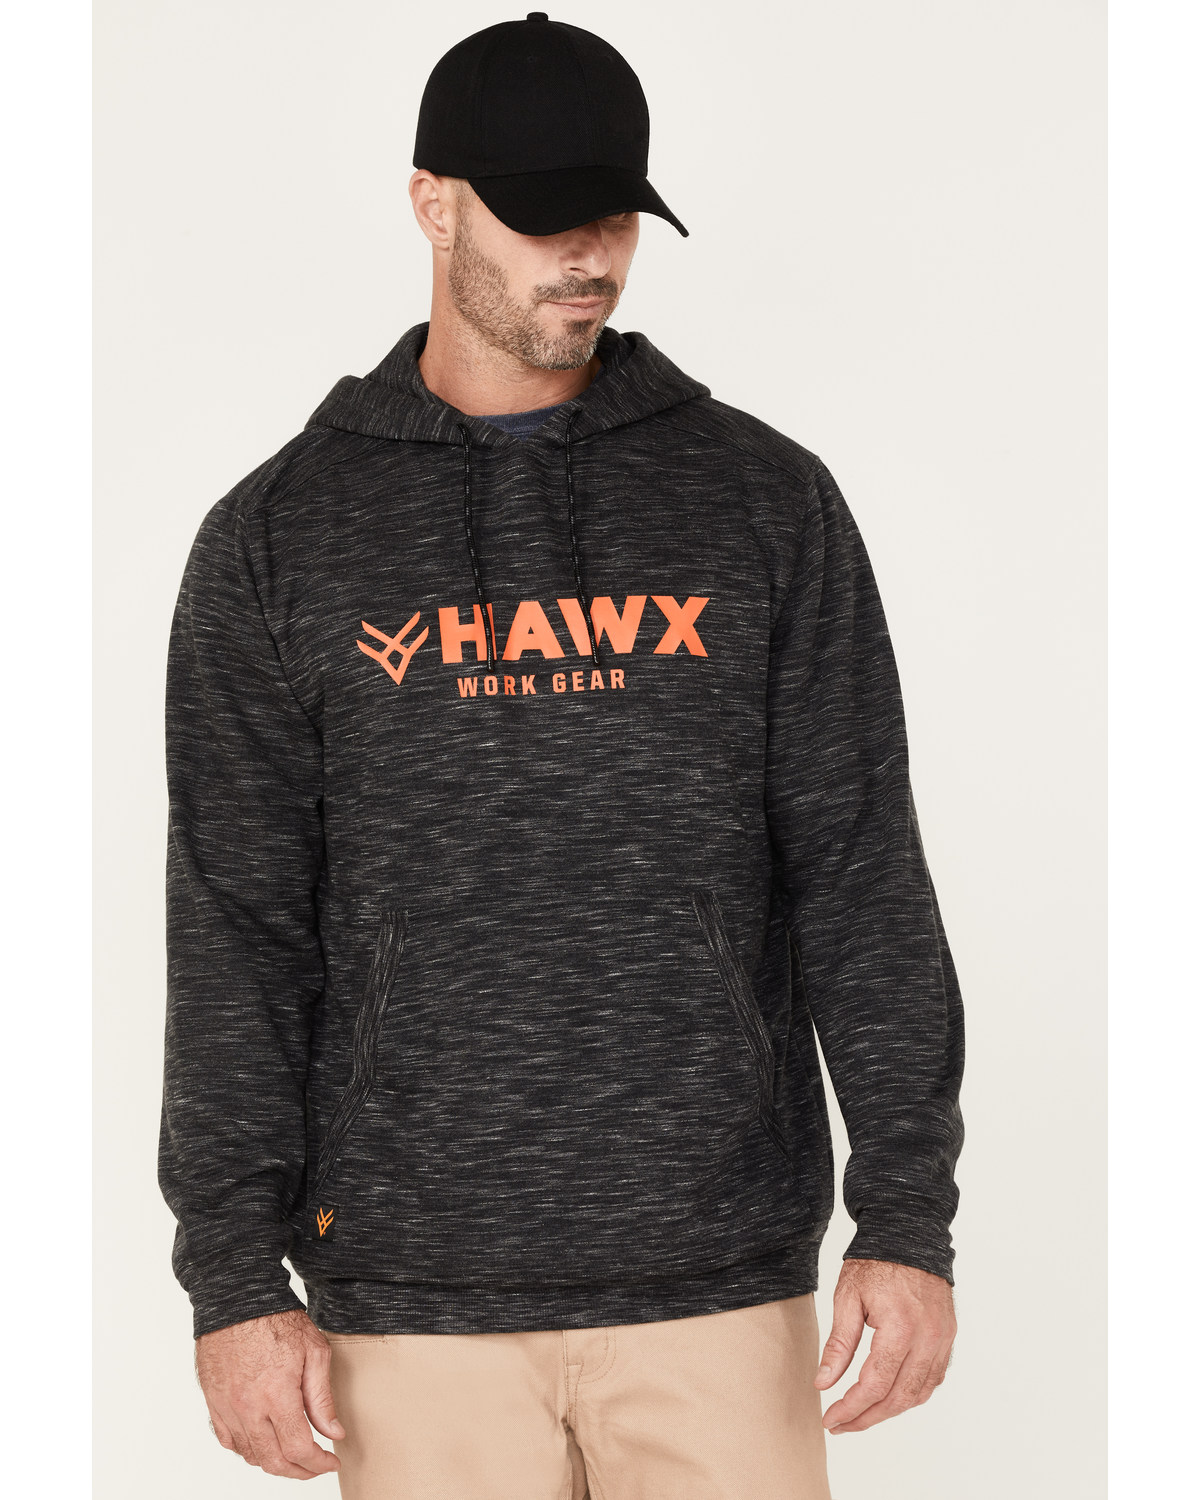 Hawx Men's Graphic Slub Pullover Hooded Work Sweatshirt